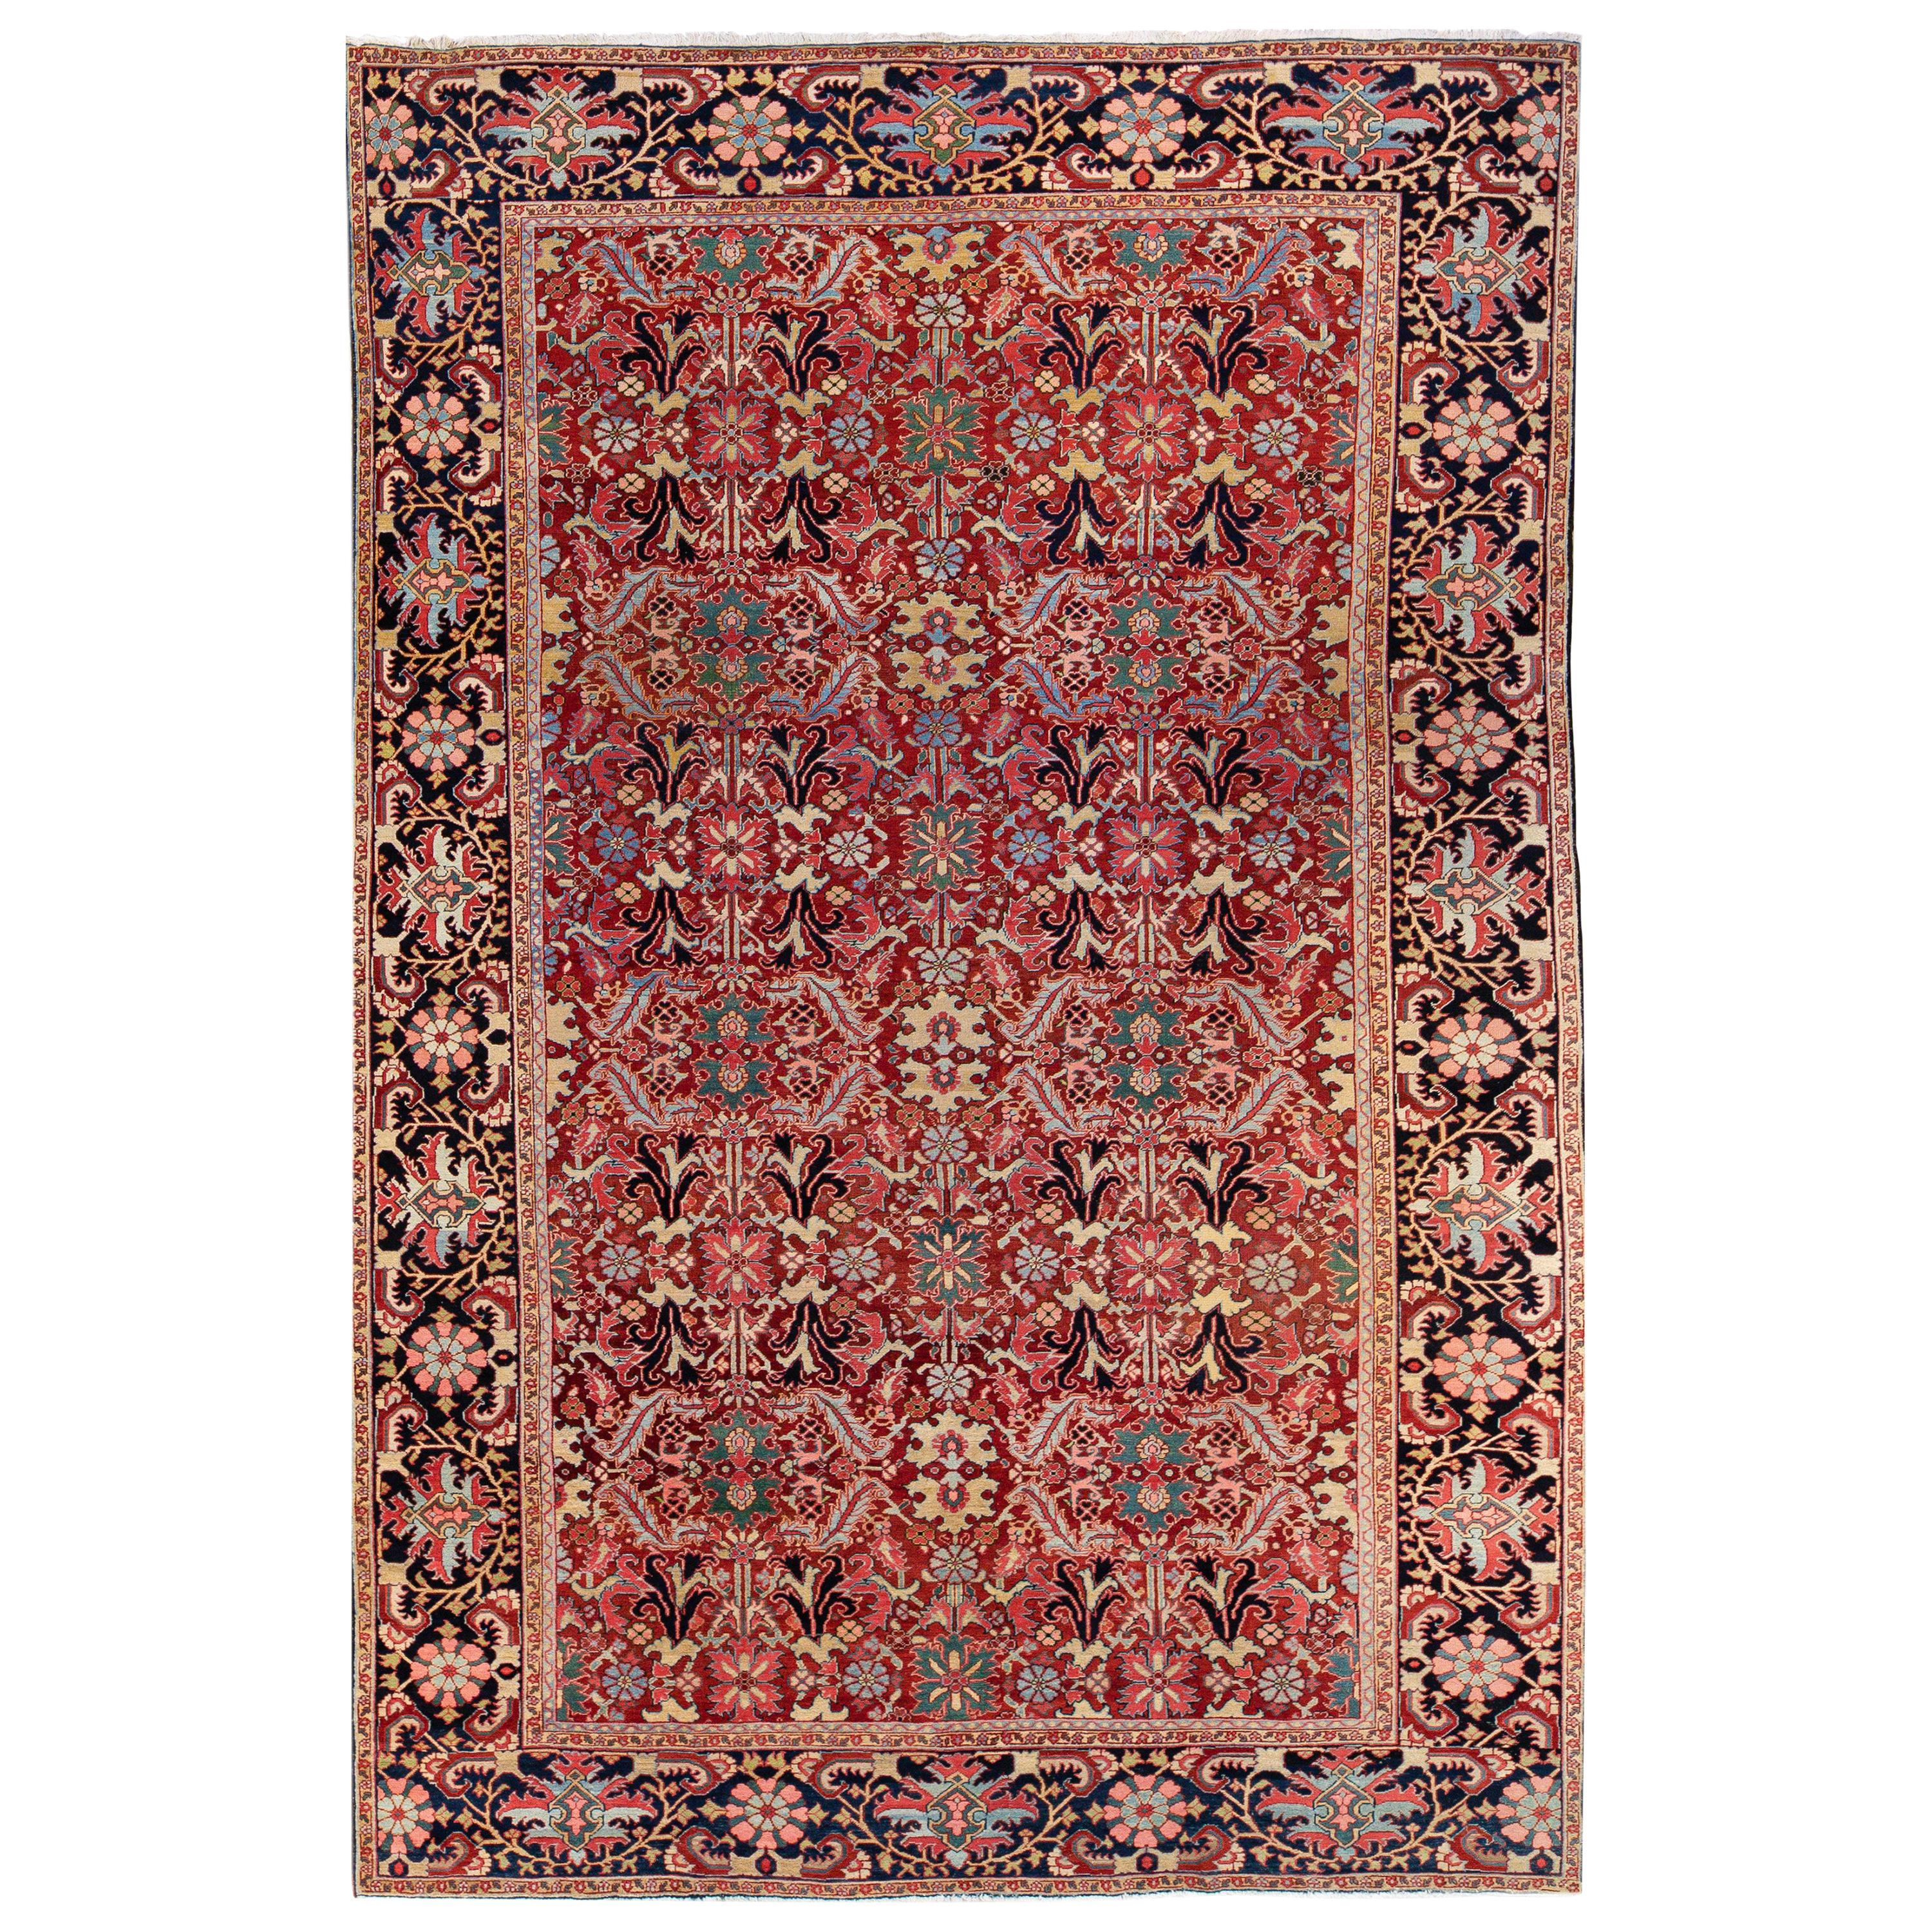 Antique Persian Heriz Handmade Multicolor Floral Designed Red Oversize Wool Rug